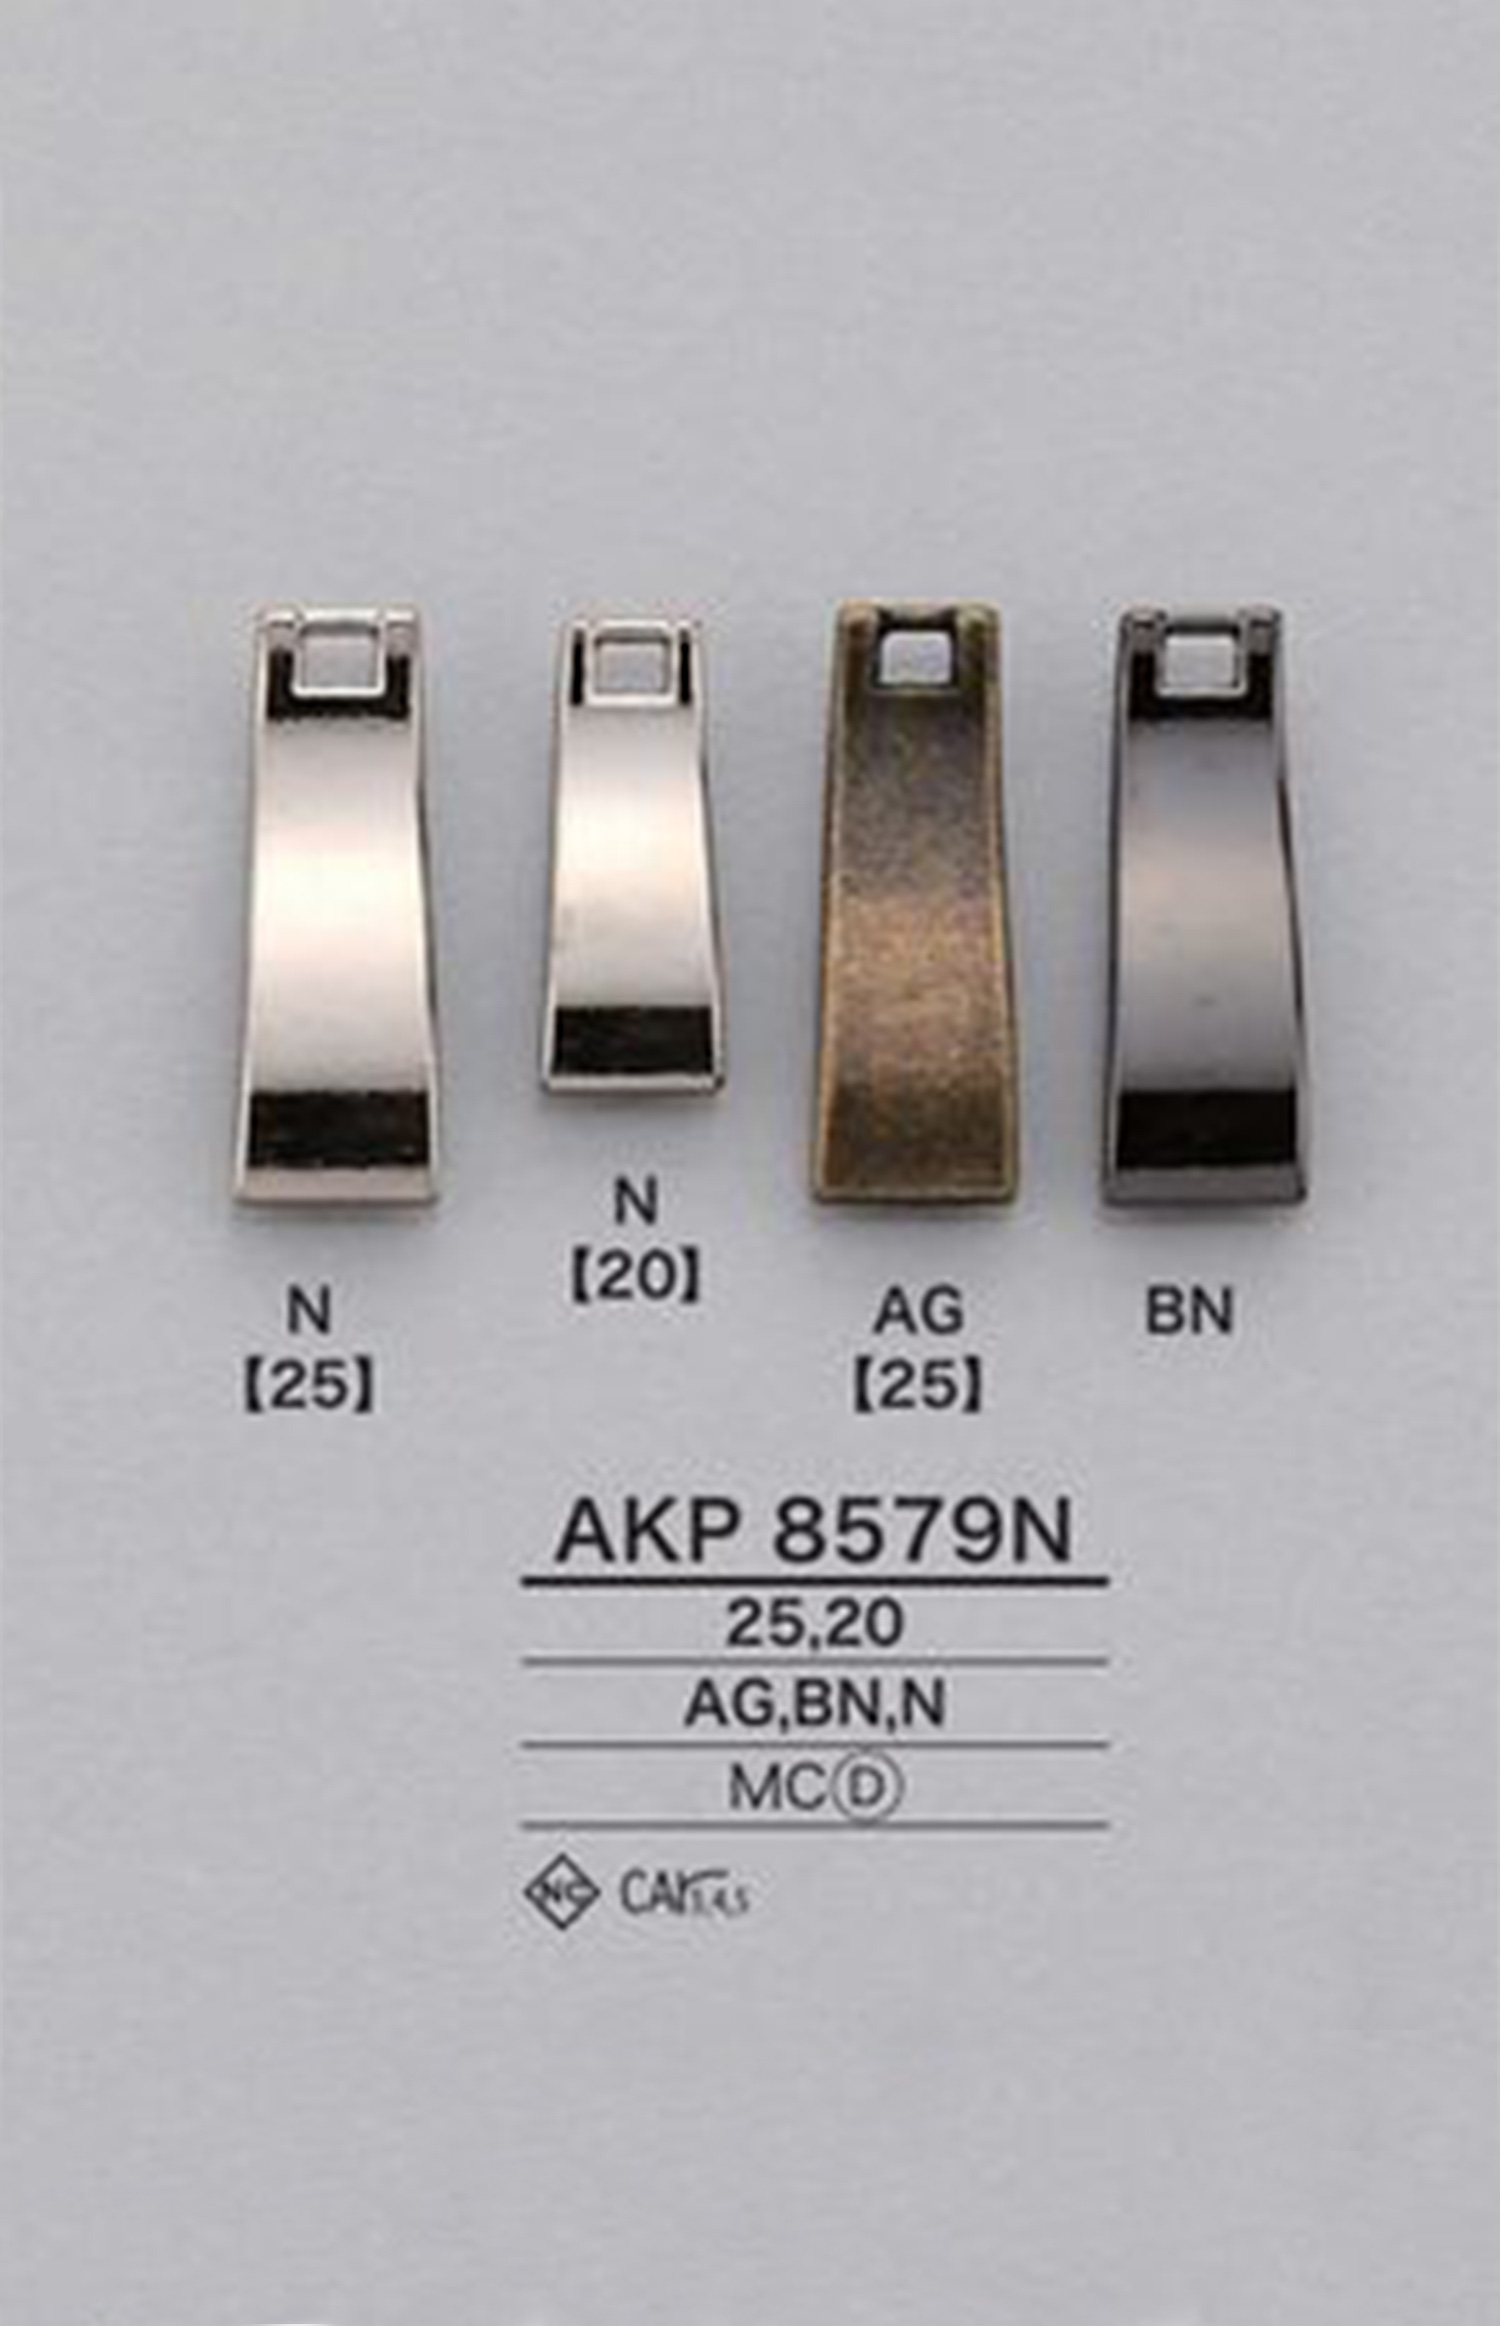 AKP8579N Zipper Point (Pull Tab) IRIS